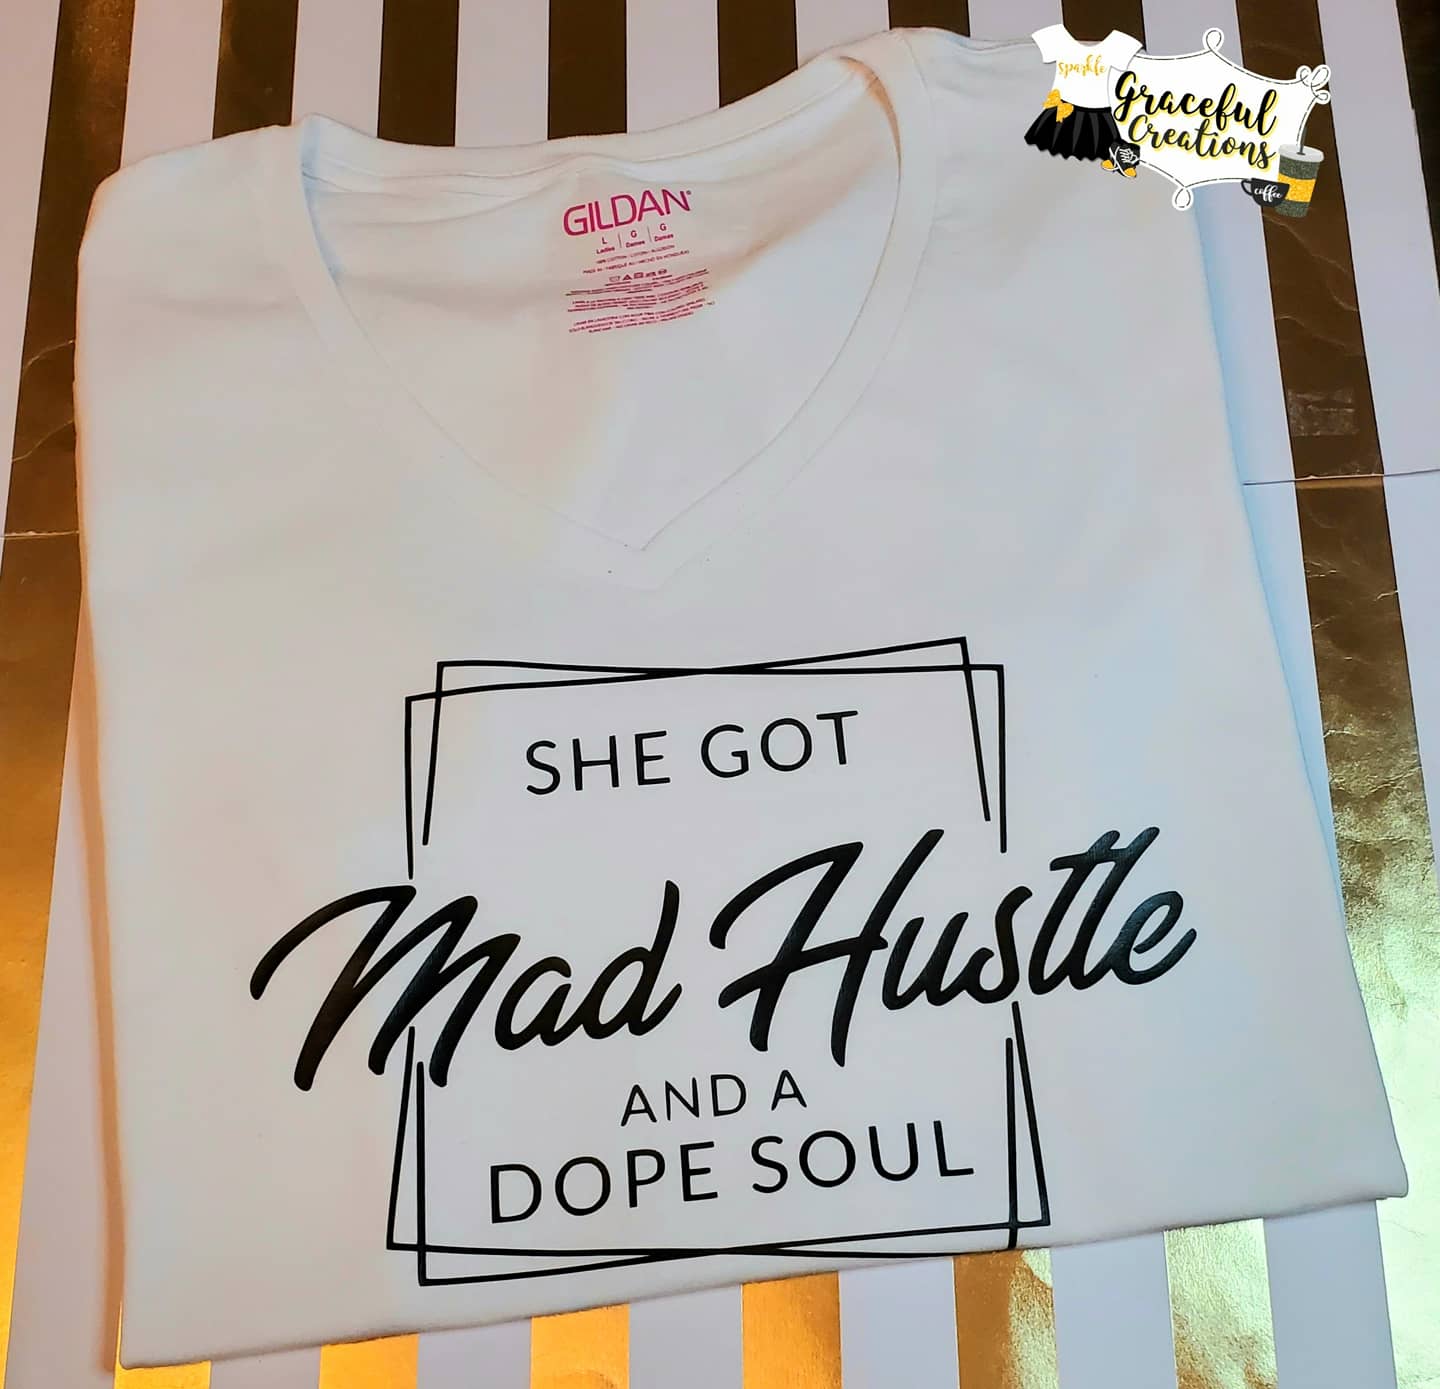 She Got Mad Hustle and a Dope Soul Tee Shirt